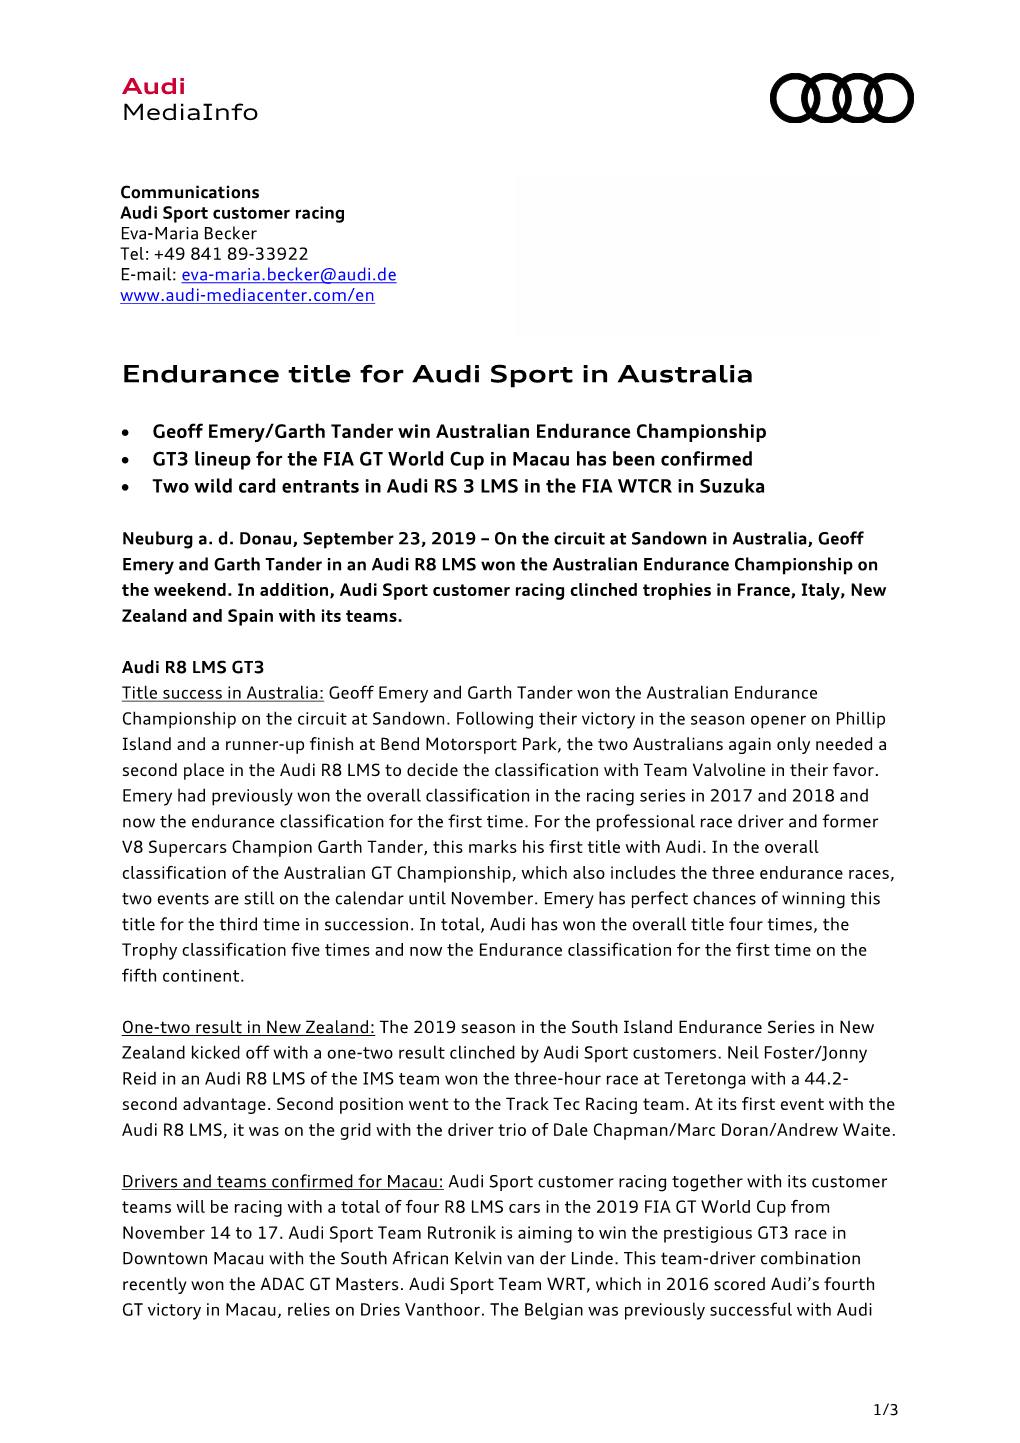 Endurance Title for Audi Sport in Australia